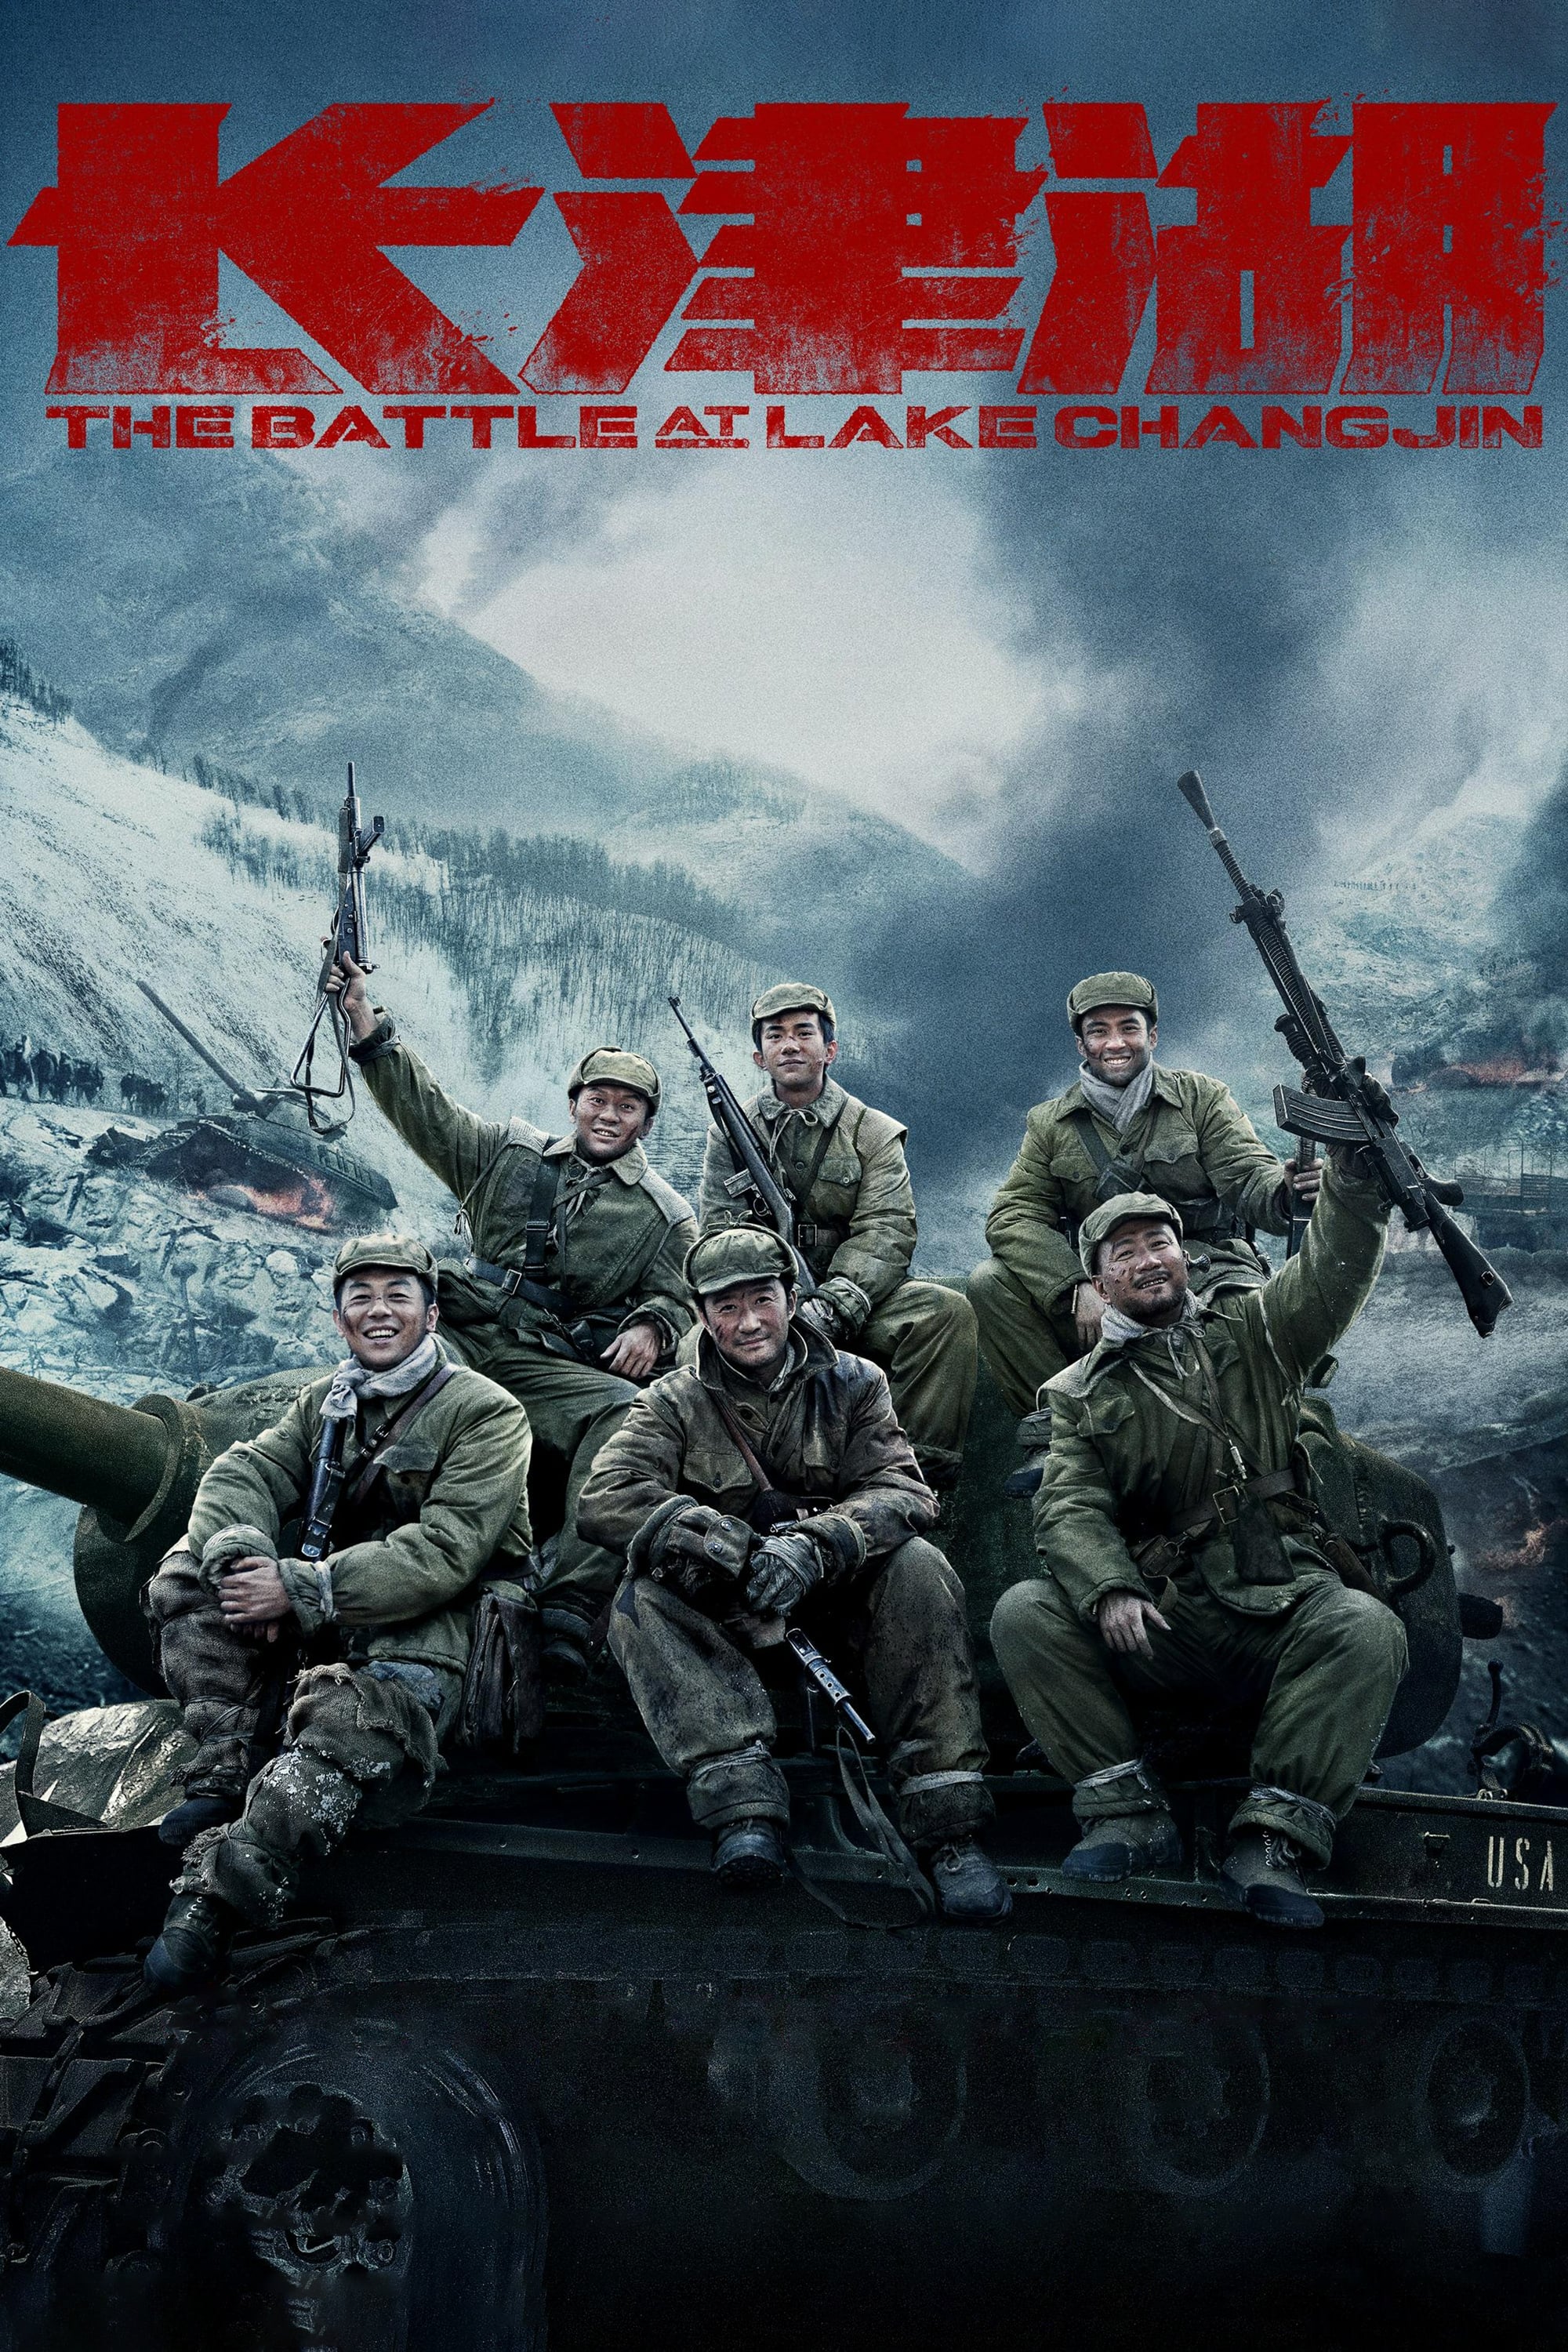 Download The Battle at Lake Changjin 2021 torrent full movie HD FlixTV